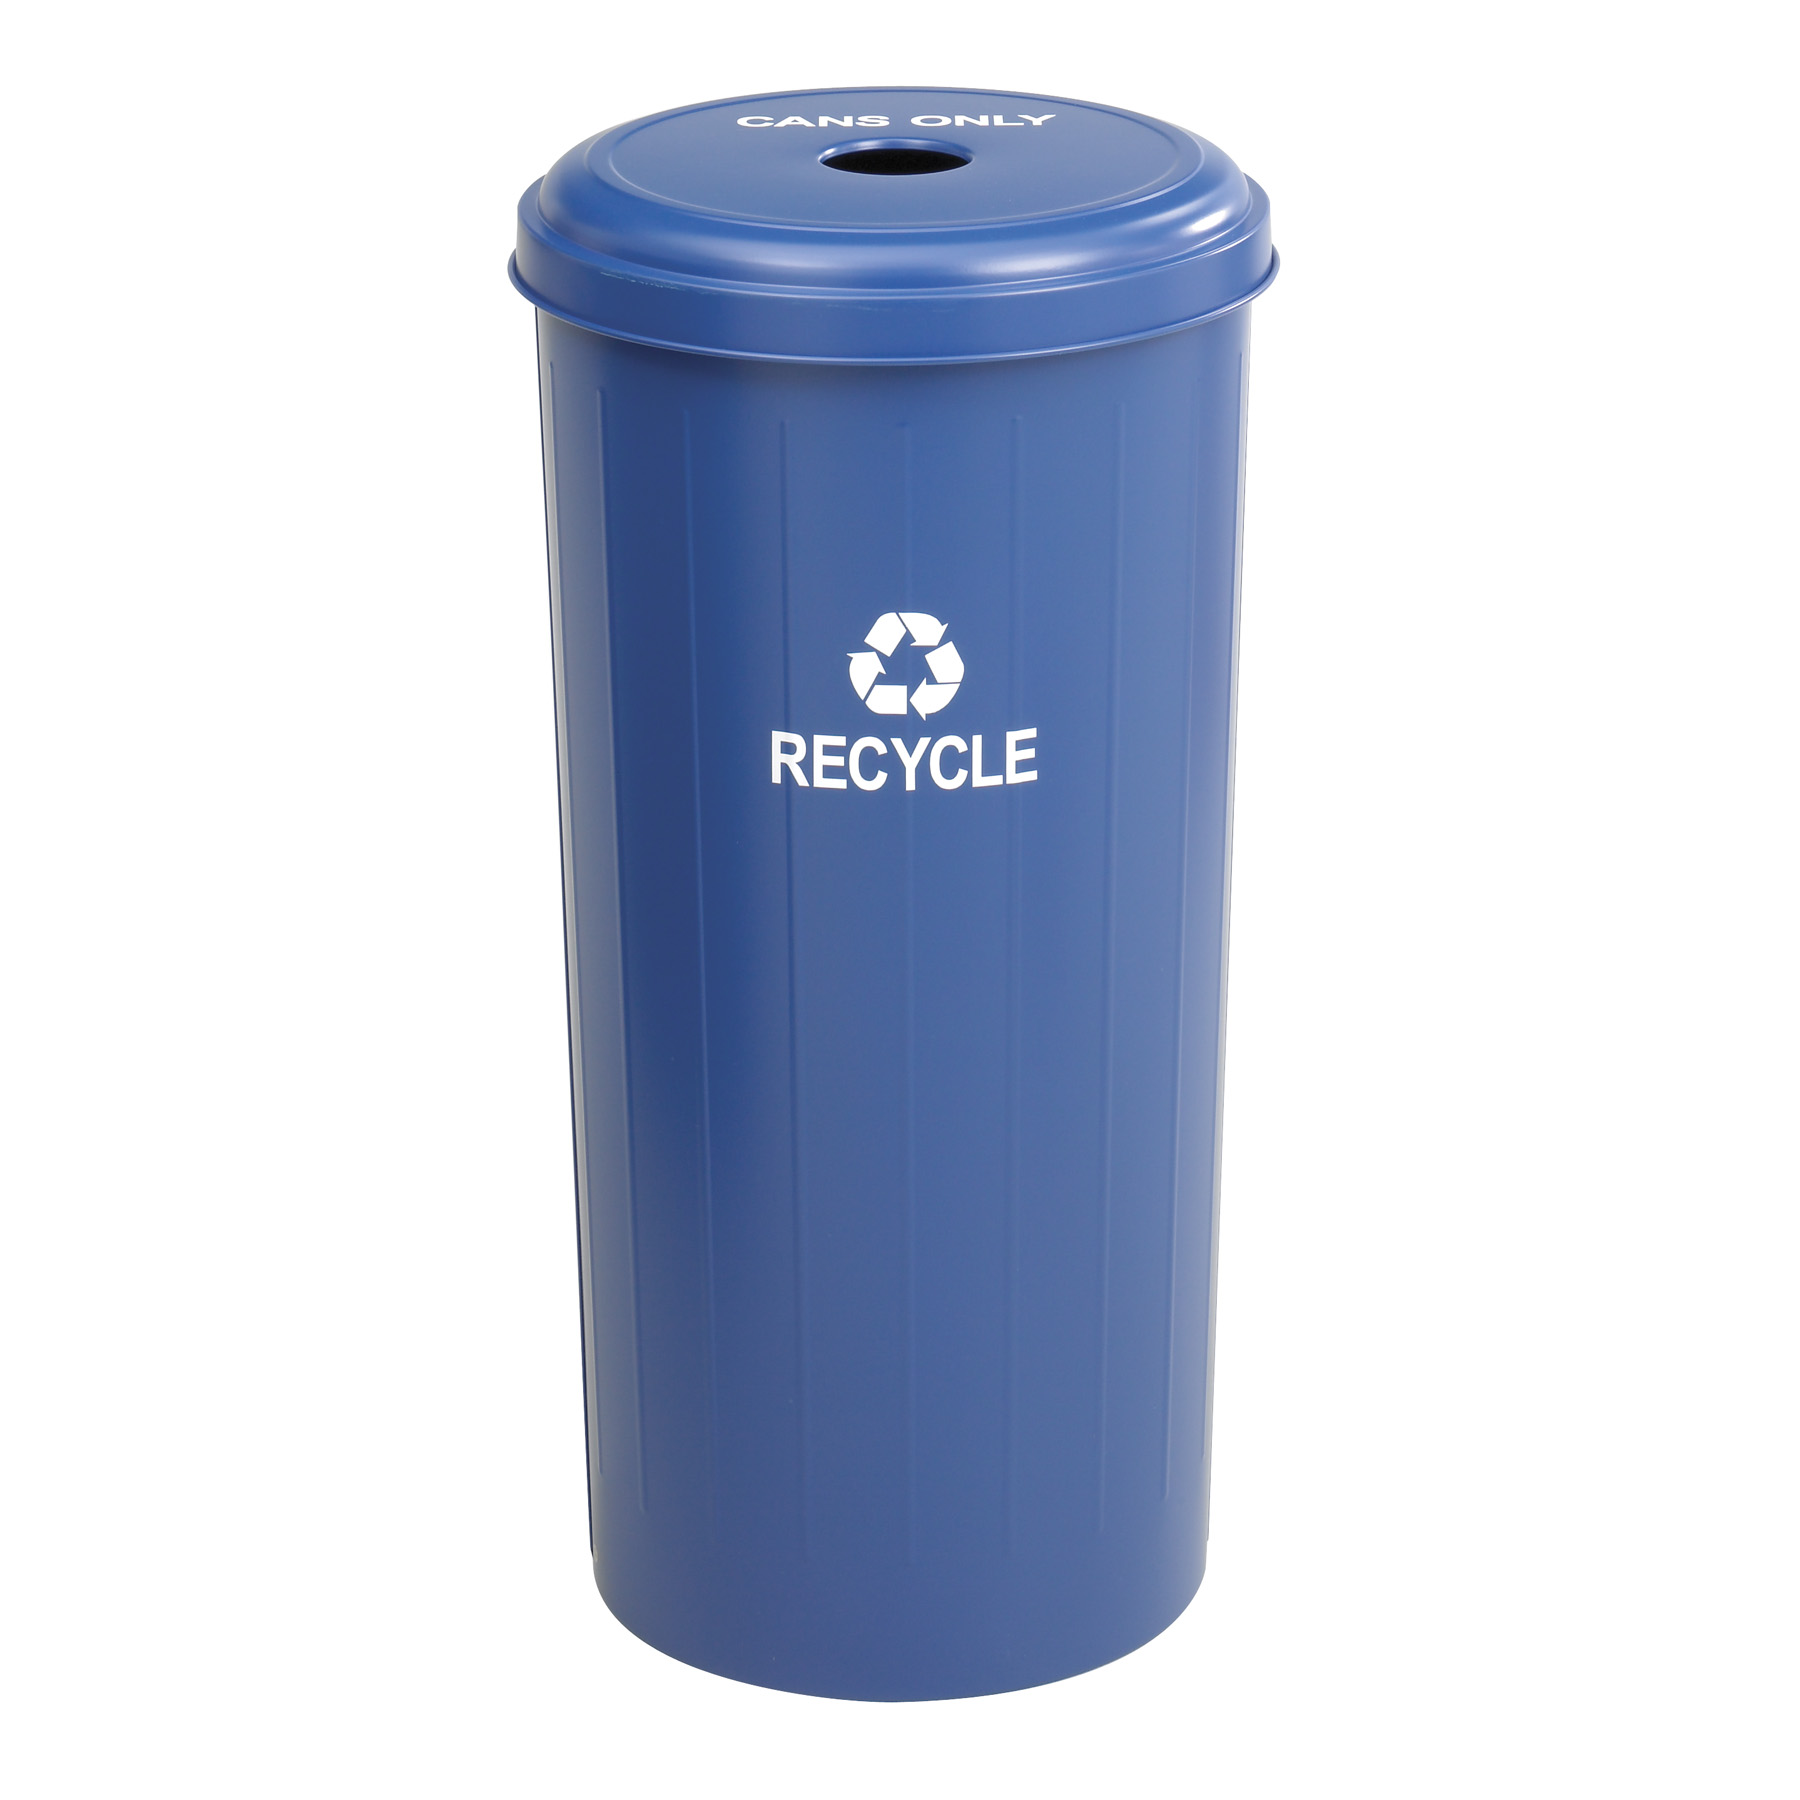 Wholesale flat bin for Better Waste Management –